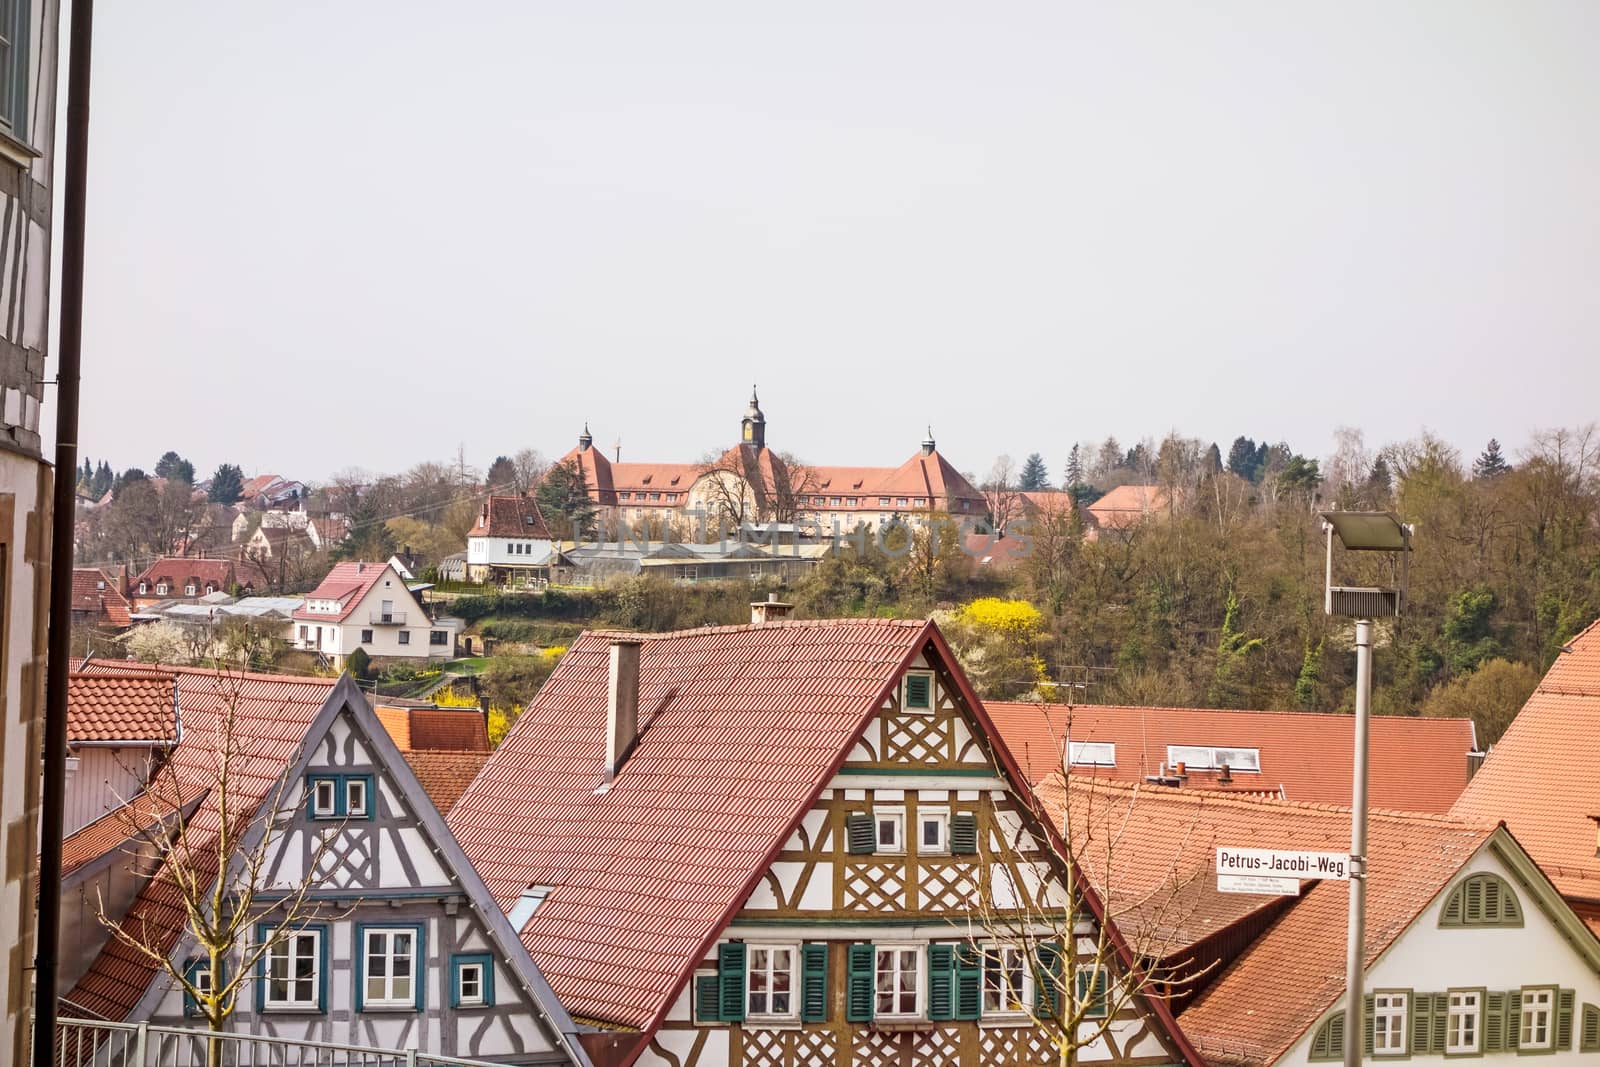 Backnang, Germany - April 03, 2016: View over the half-timbered buildings of Backnang, near town center.